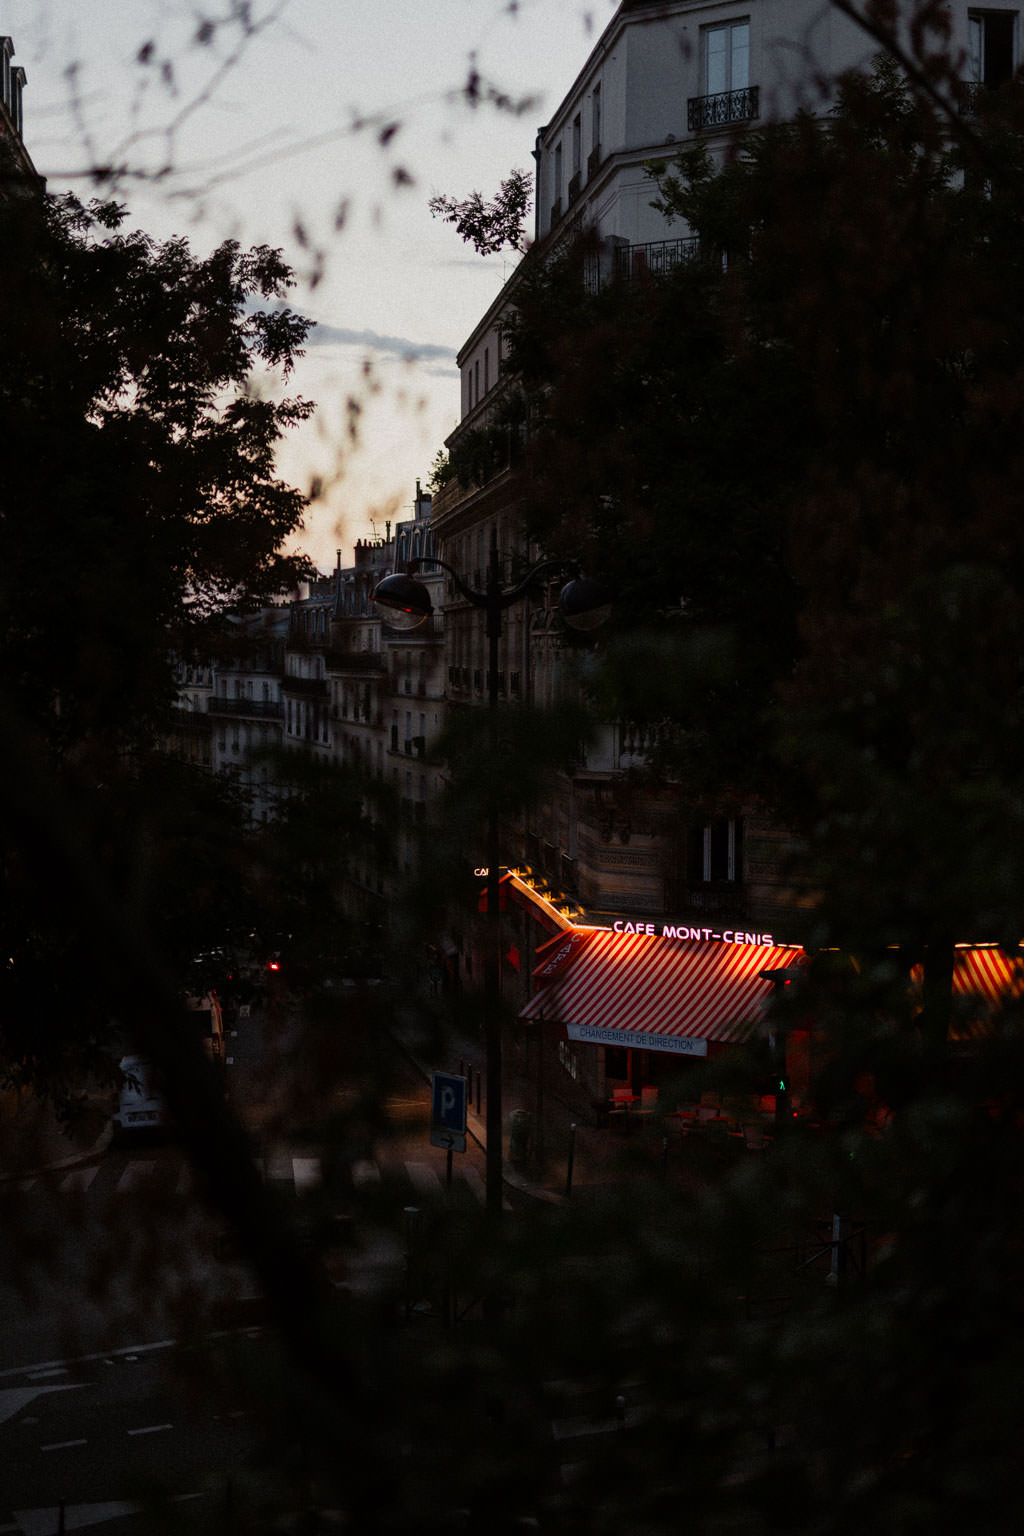 Montmartre just before sunrise - The neon sign of a typical parisian café